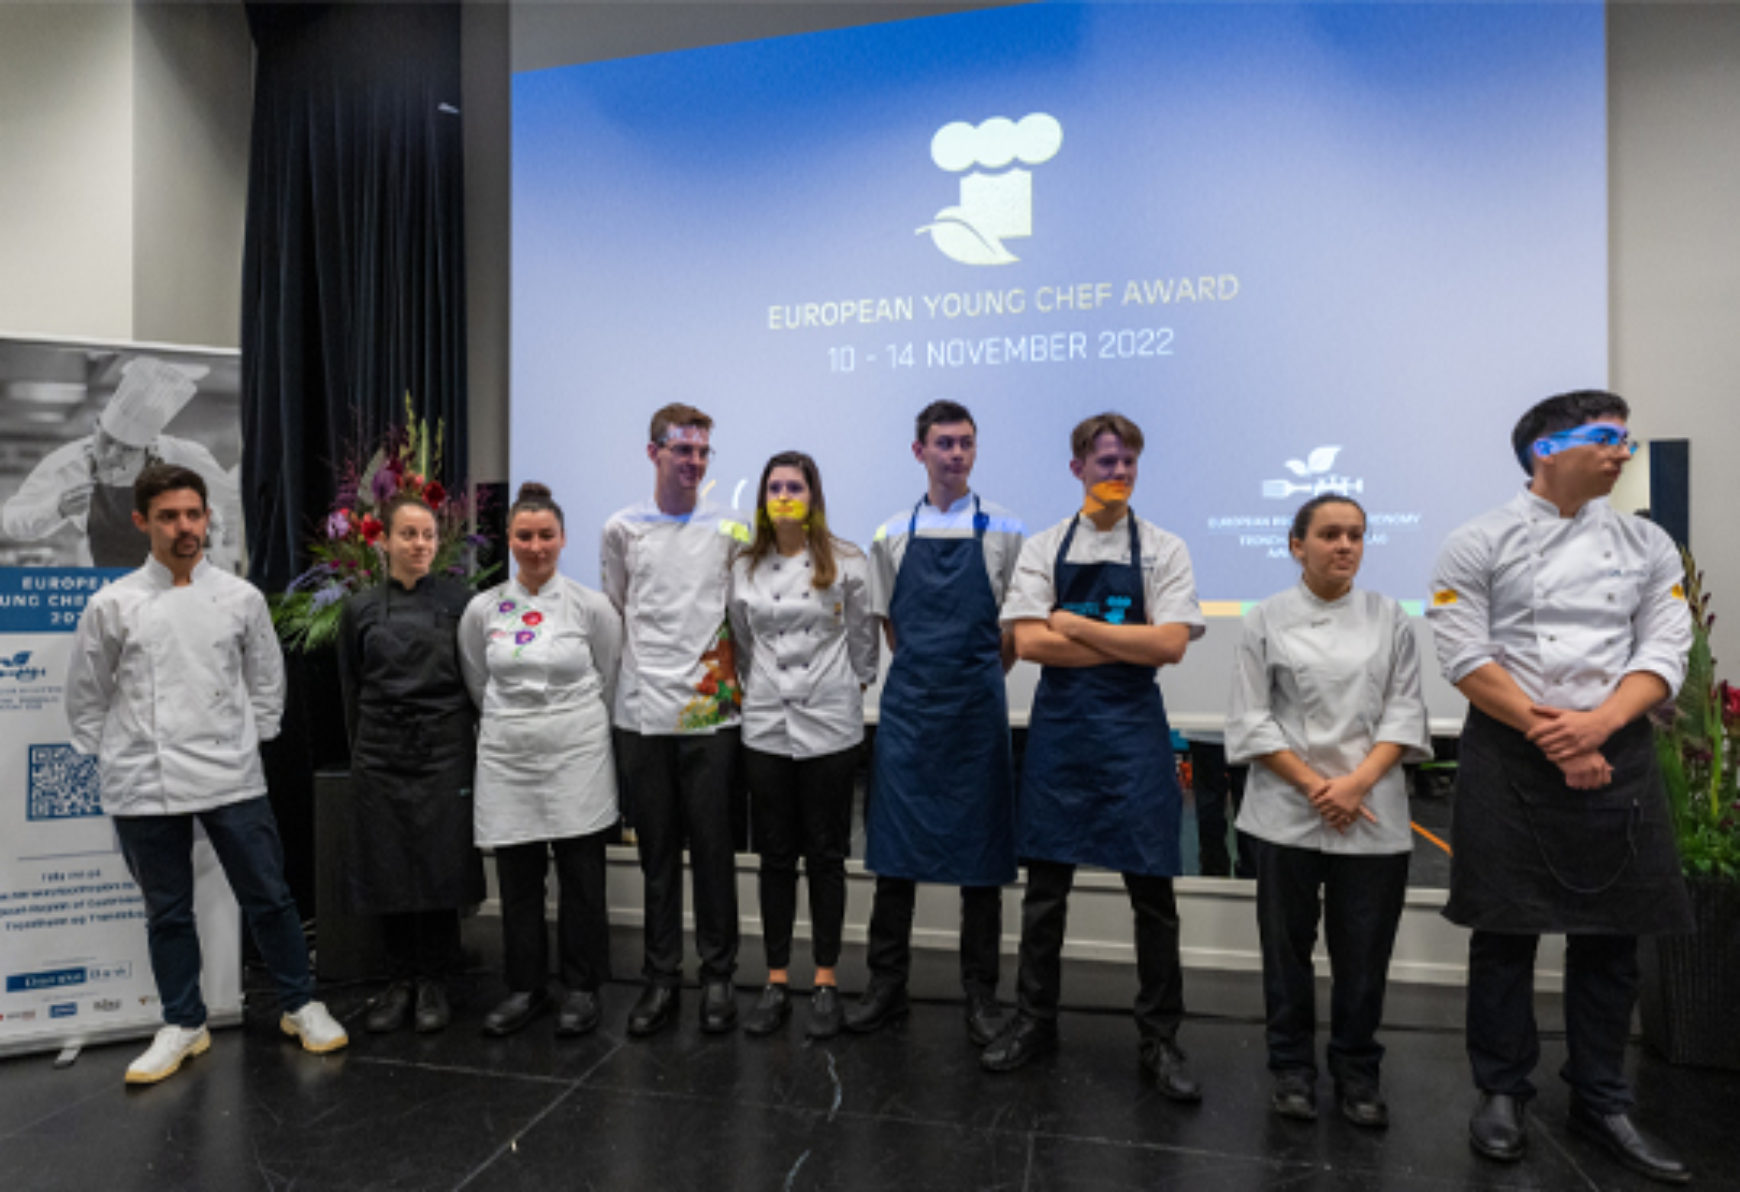 The future ambassadors of regional food and cultural diversity